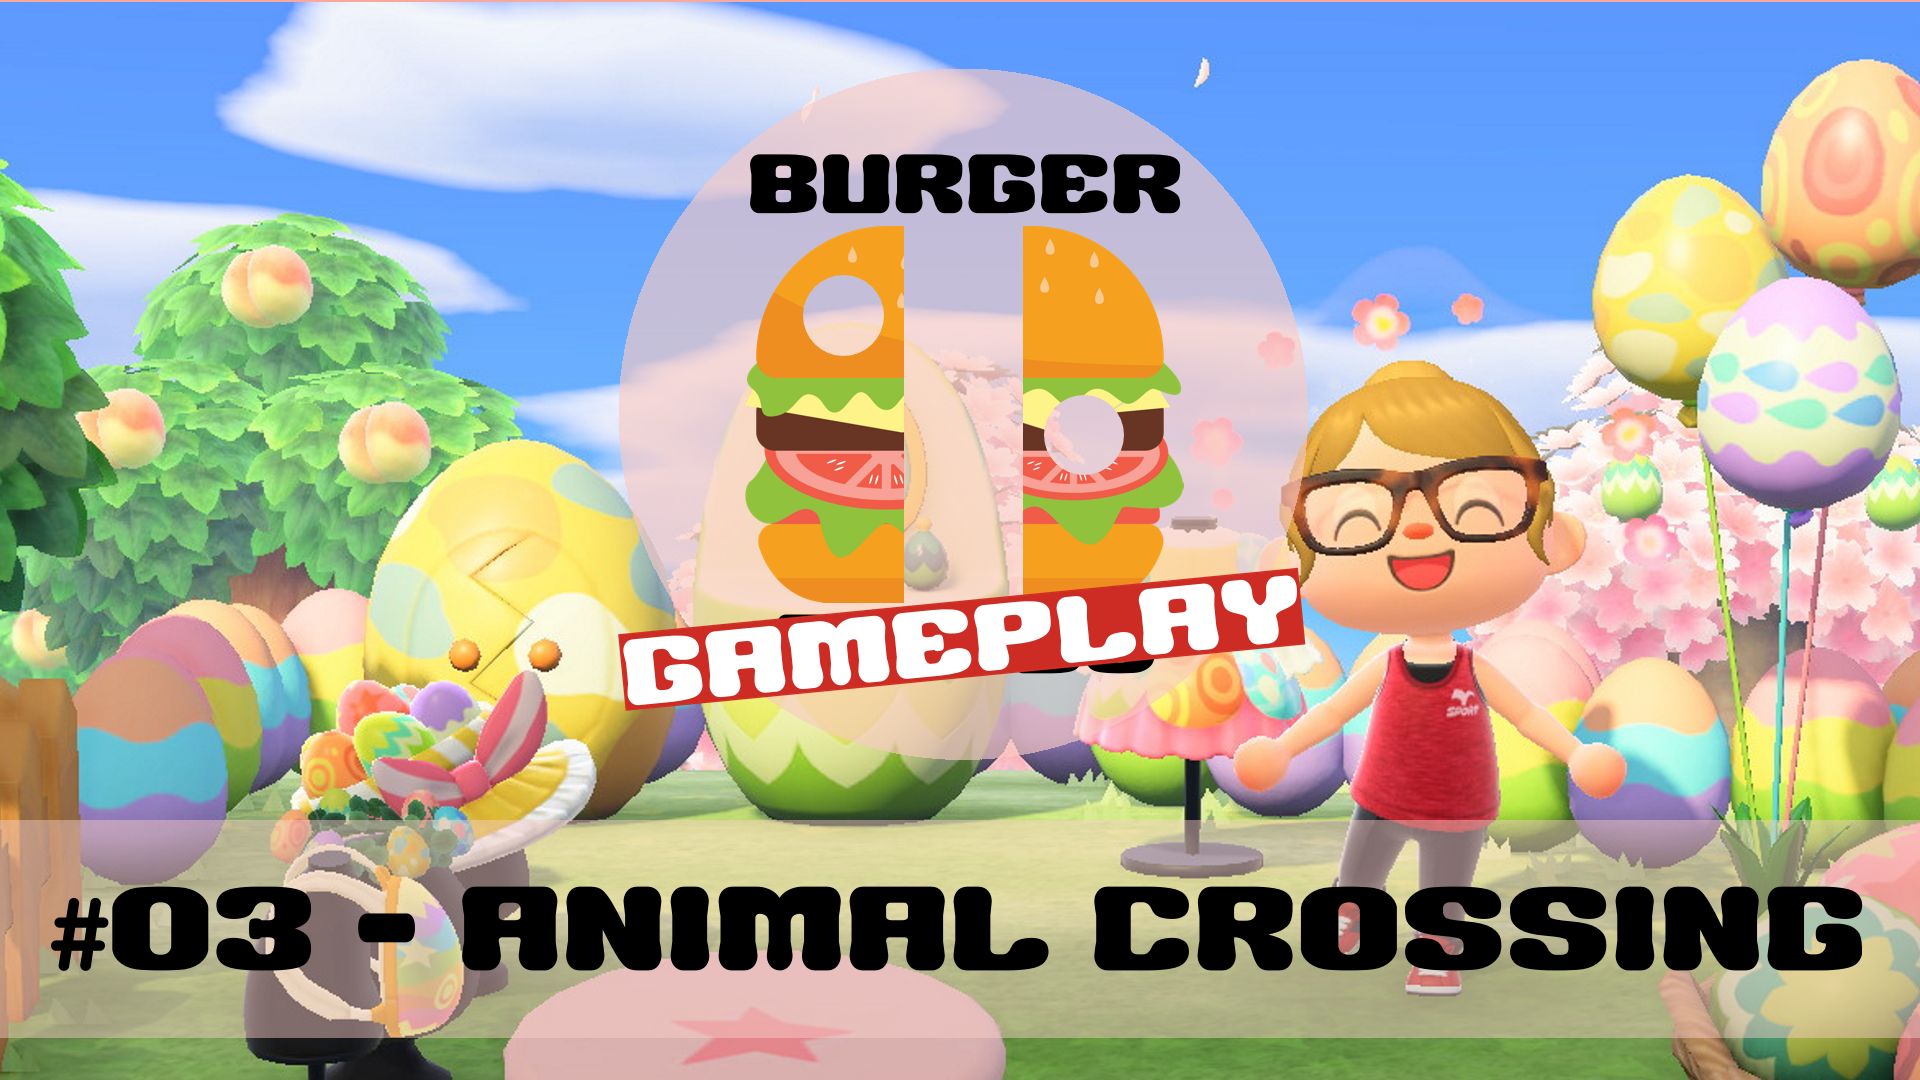 Burger Gameplay - 03